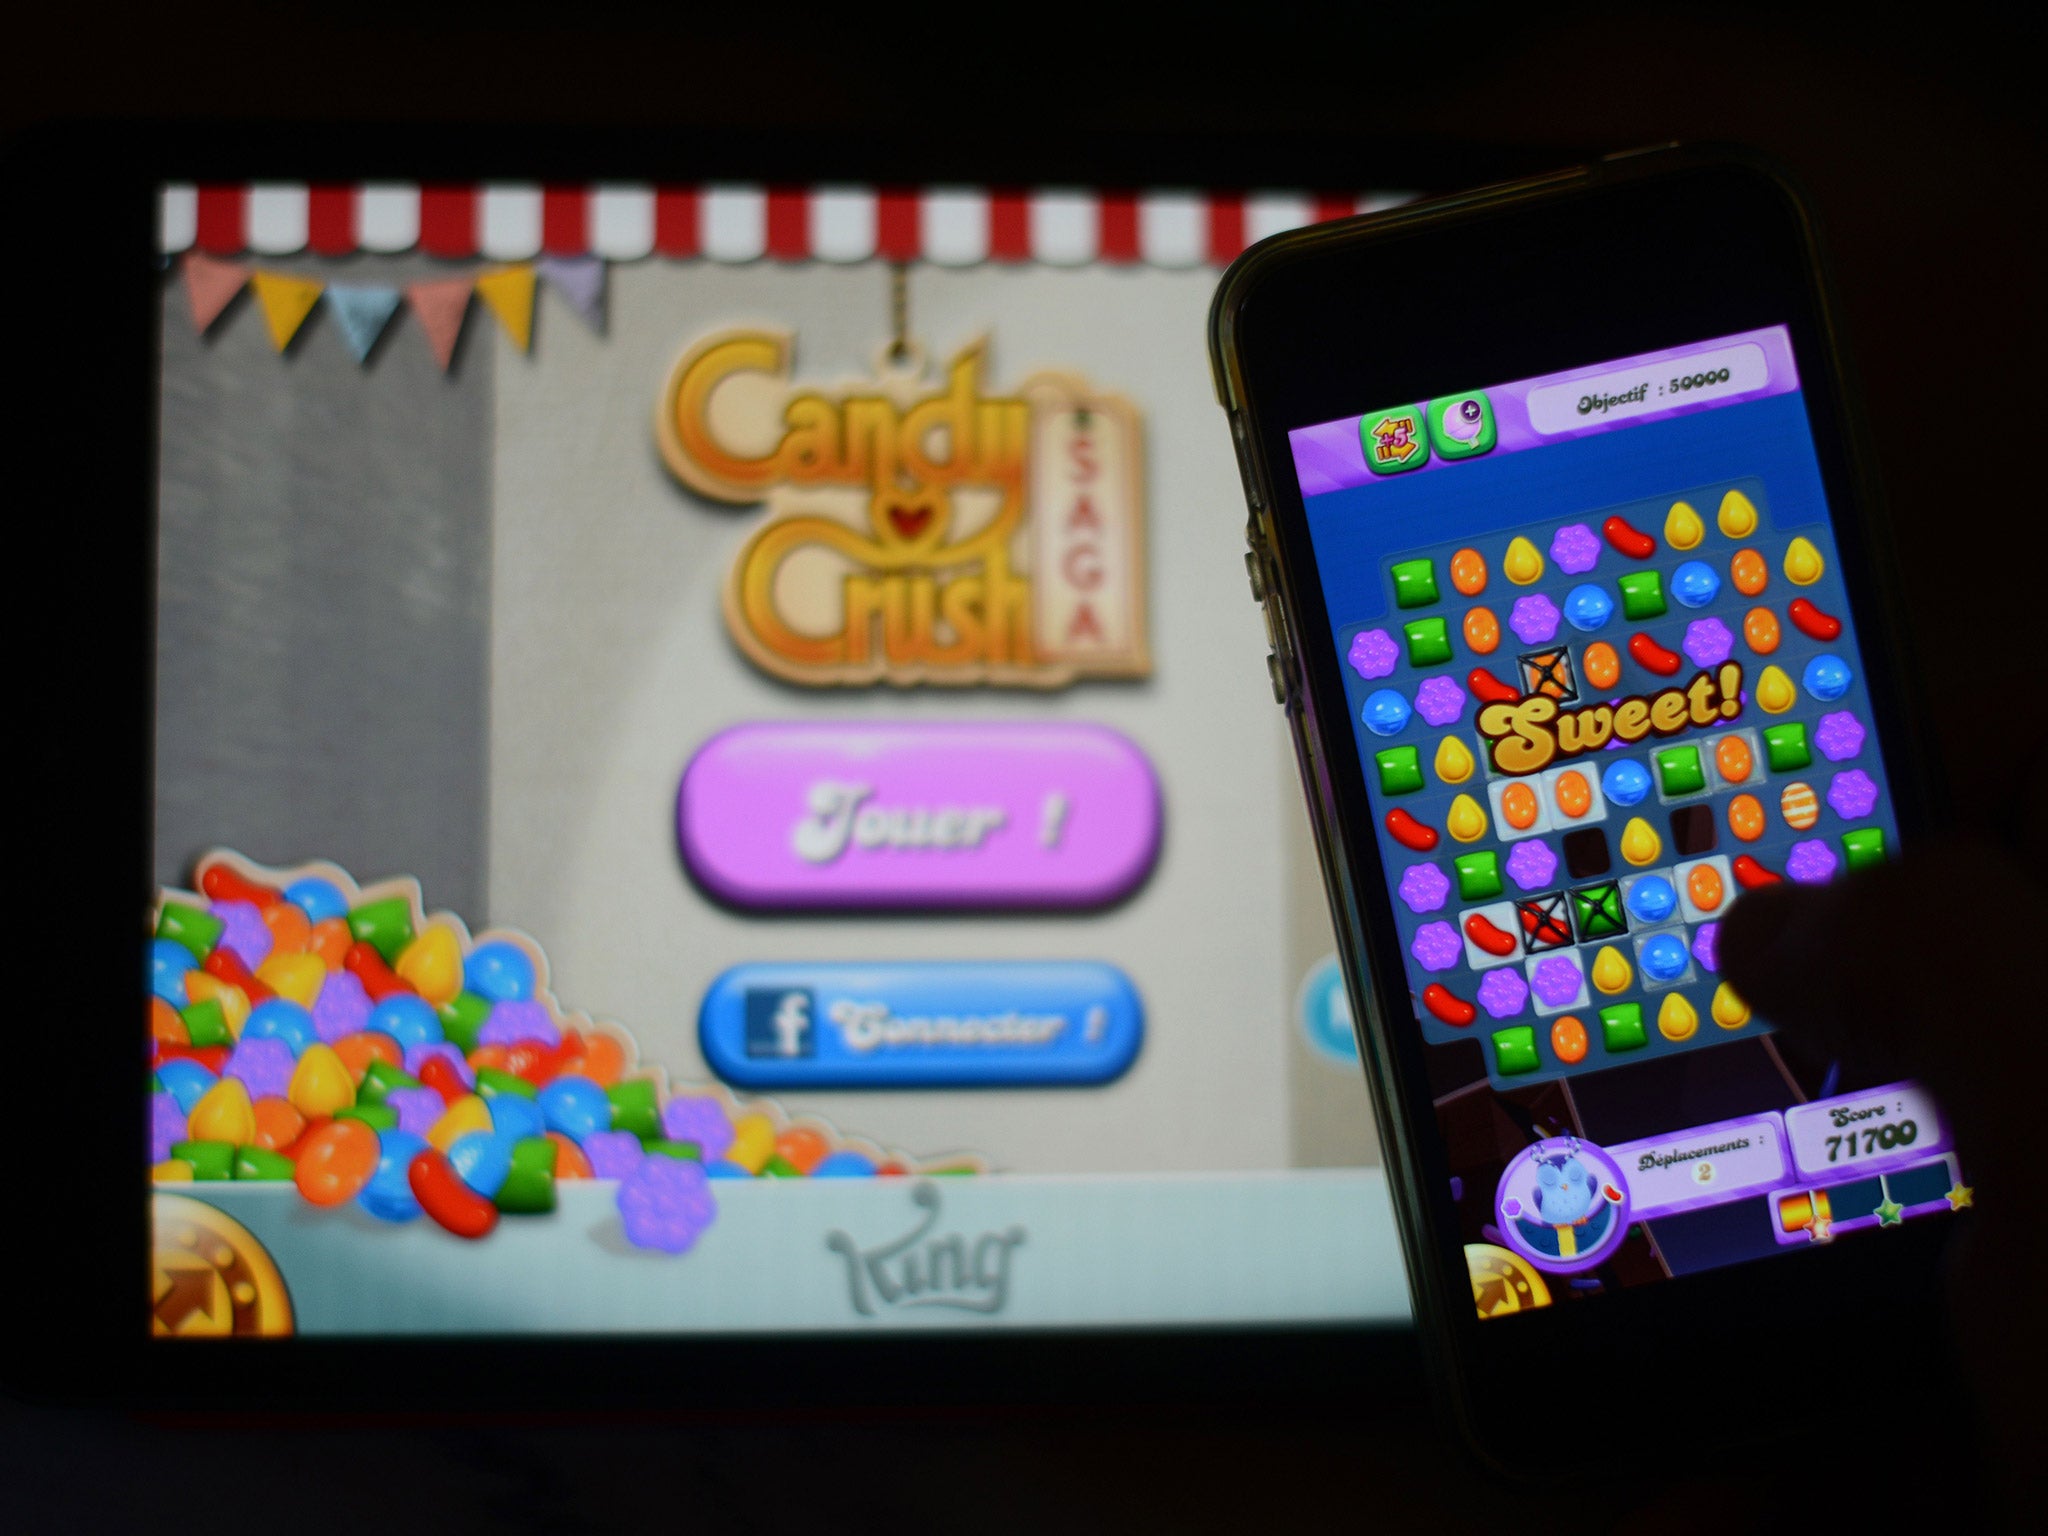 Candy Crush Saga finally hits Windows Phone